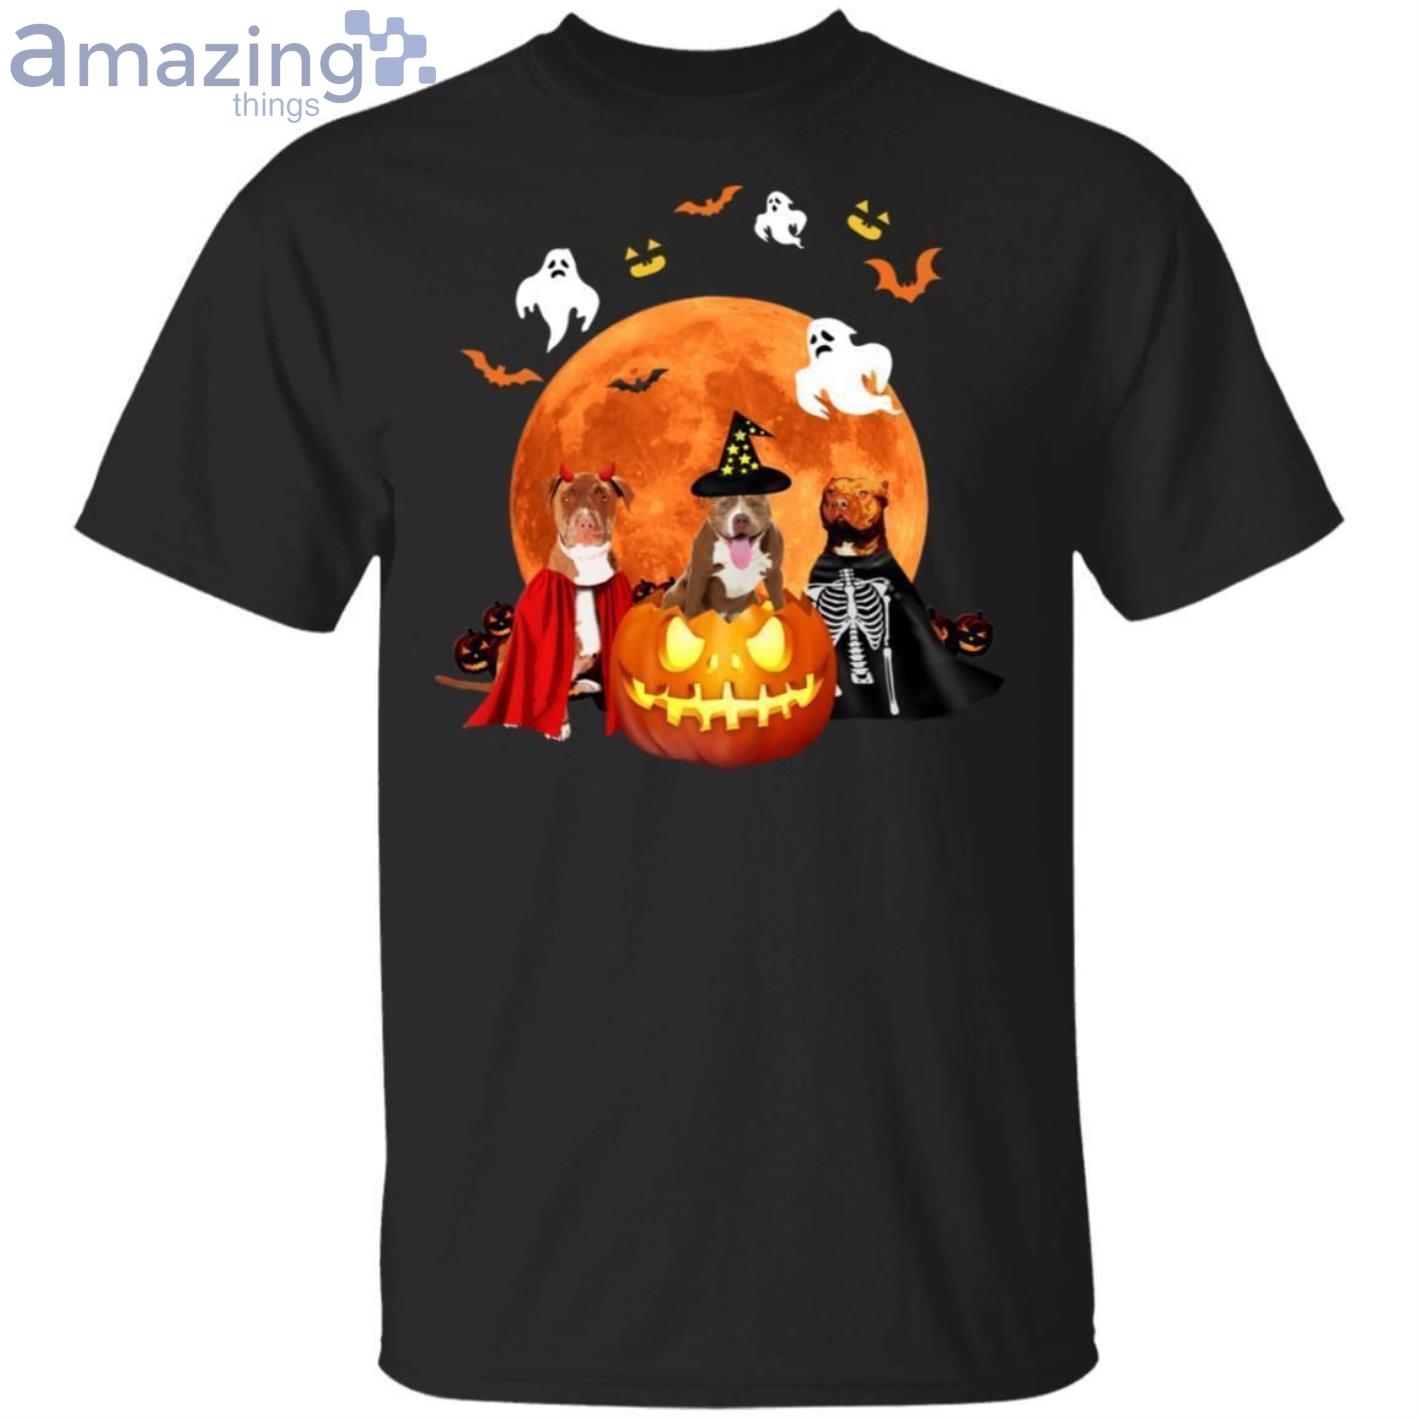 Three Pit Bulls And A Pumpkin Halloween T-Shirt Product Photo 1